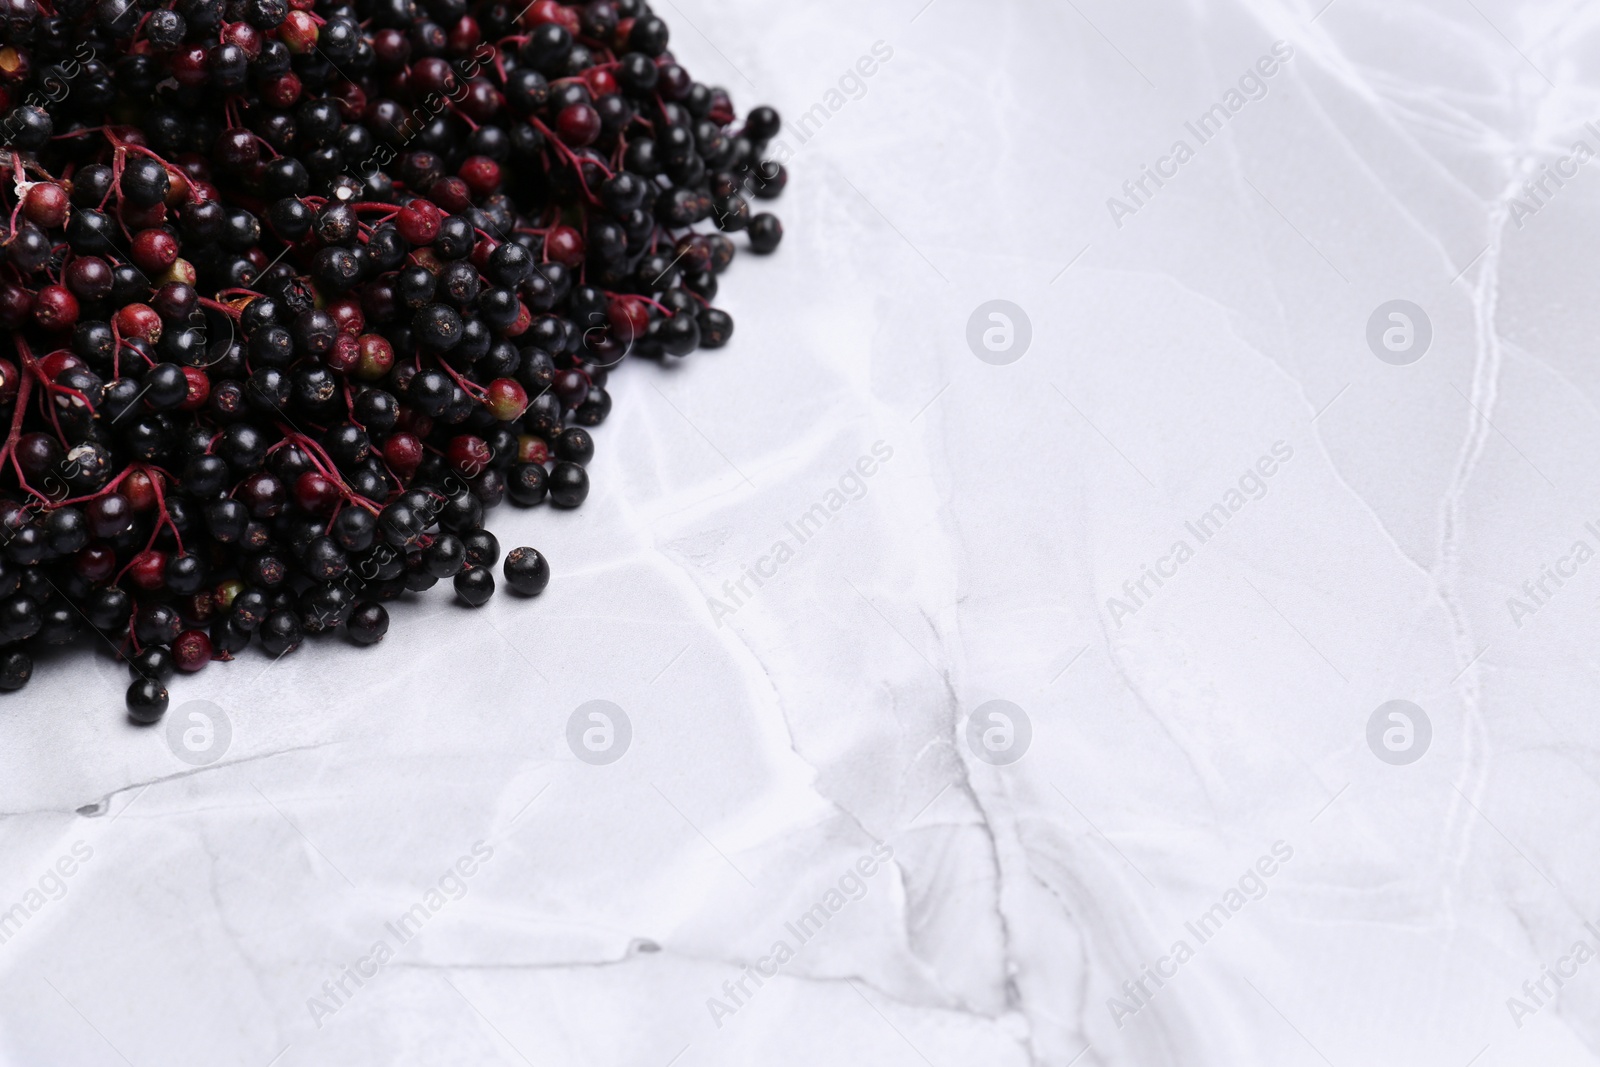 Photo of Tasty elderberries (Sambucus) on white marble table, space for text